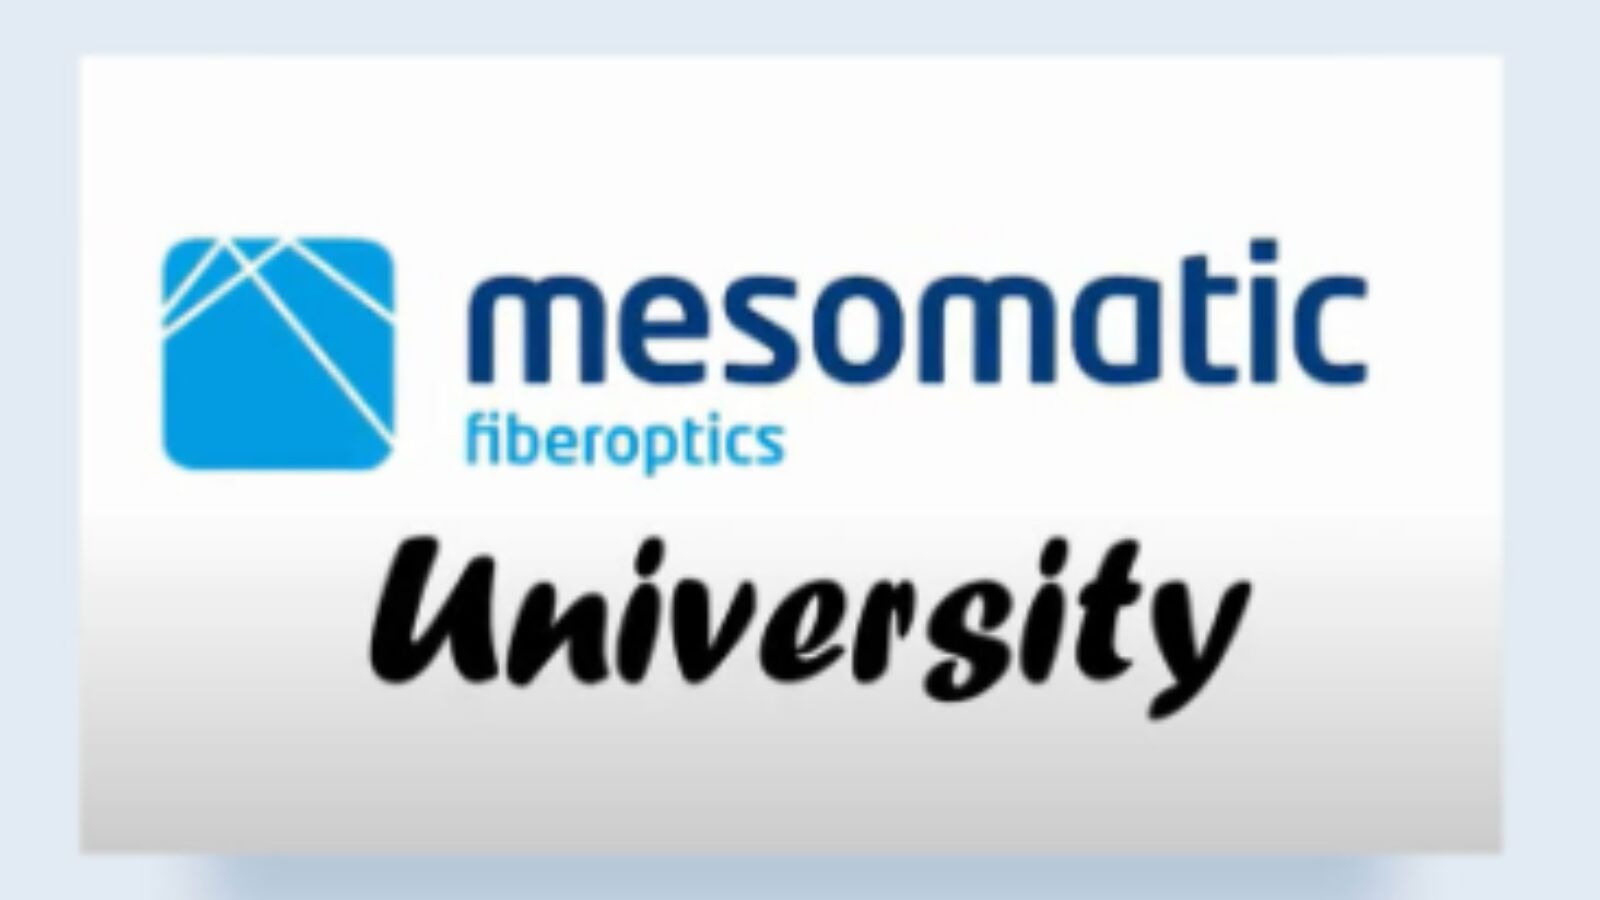 University Mesomatic